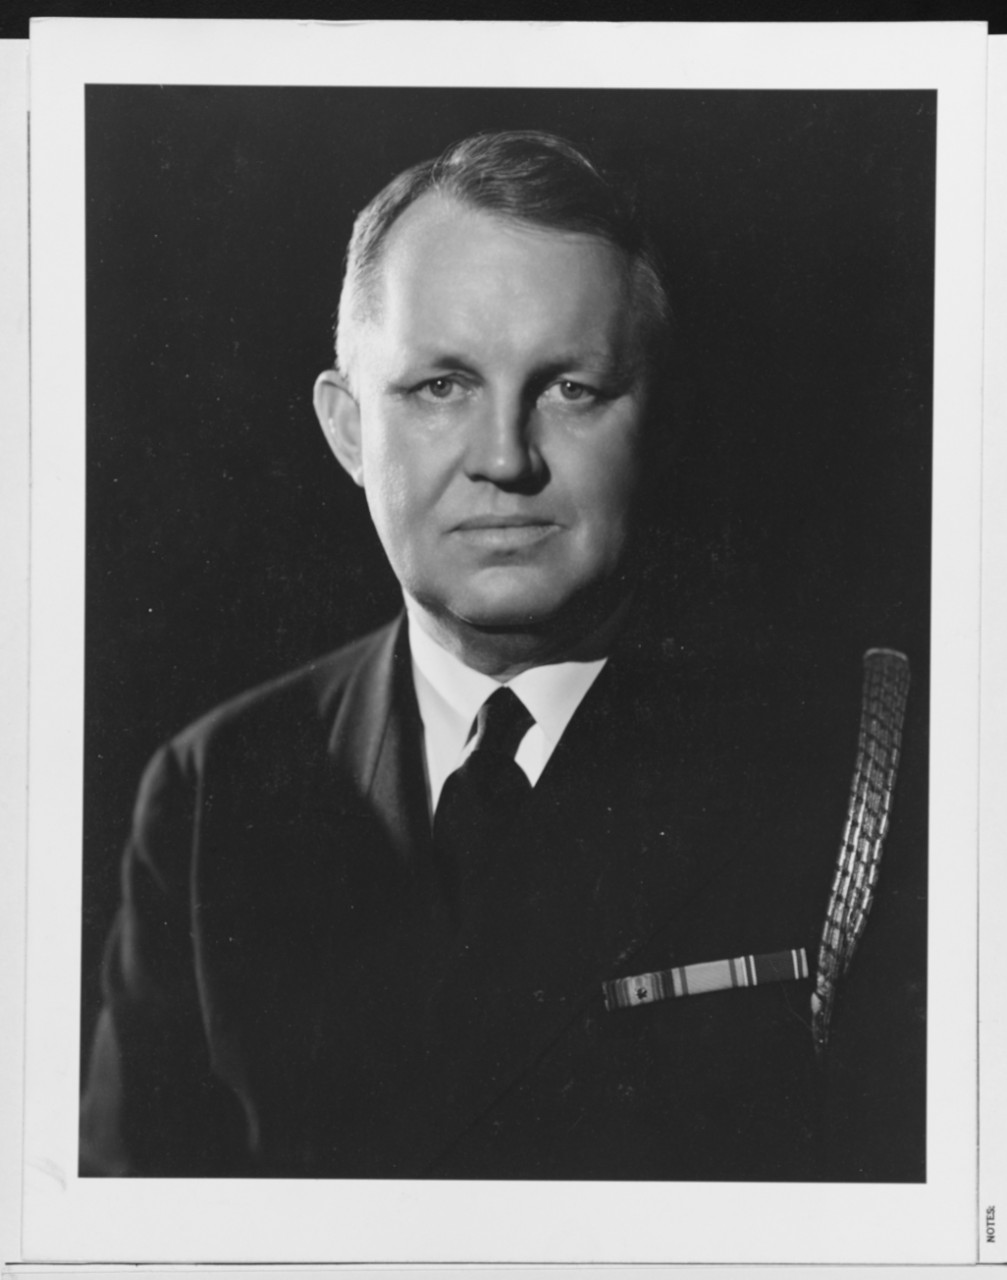 Captain Frank E. Beatty, Jr.